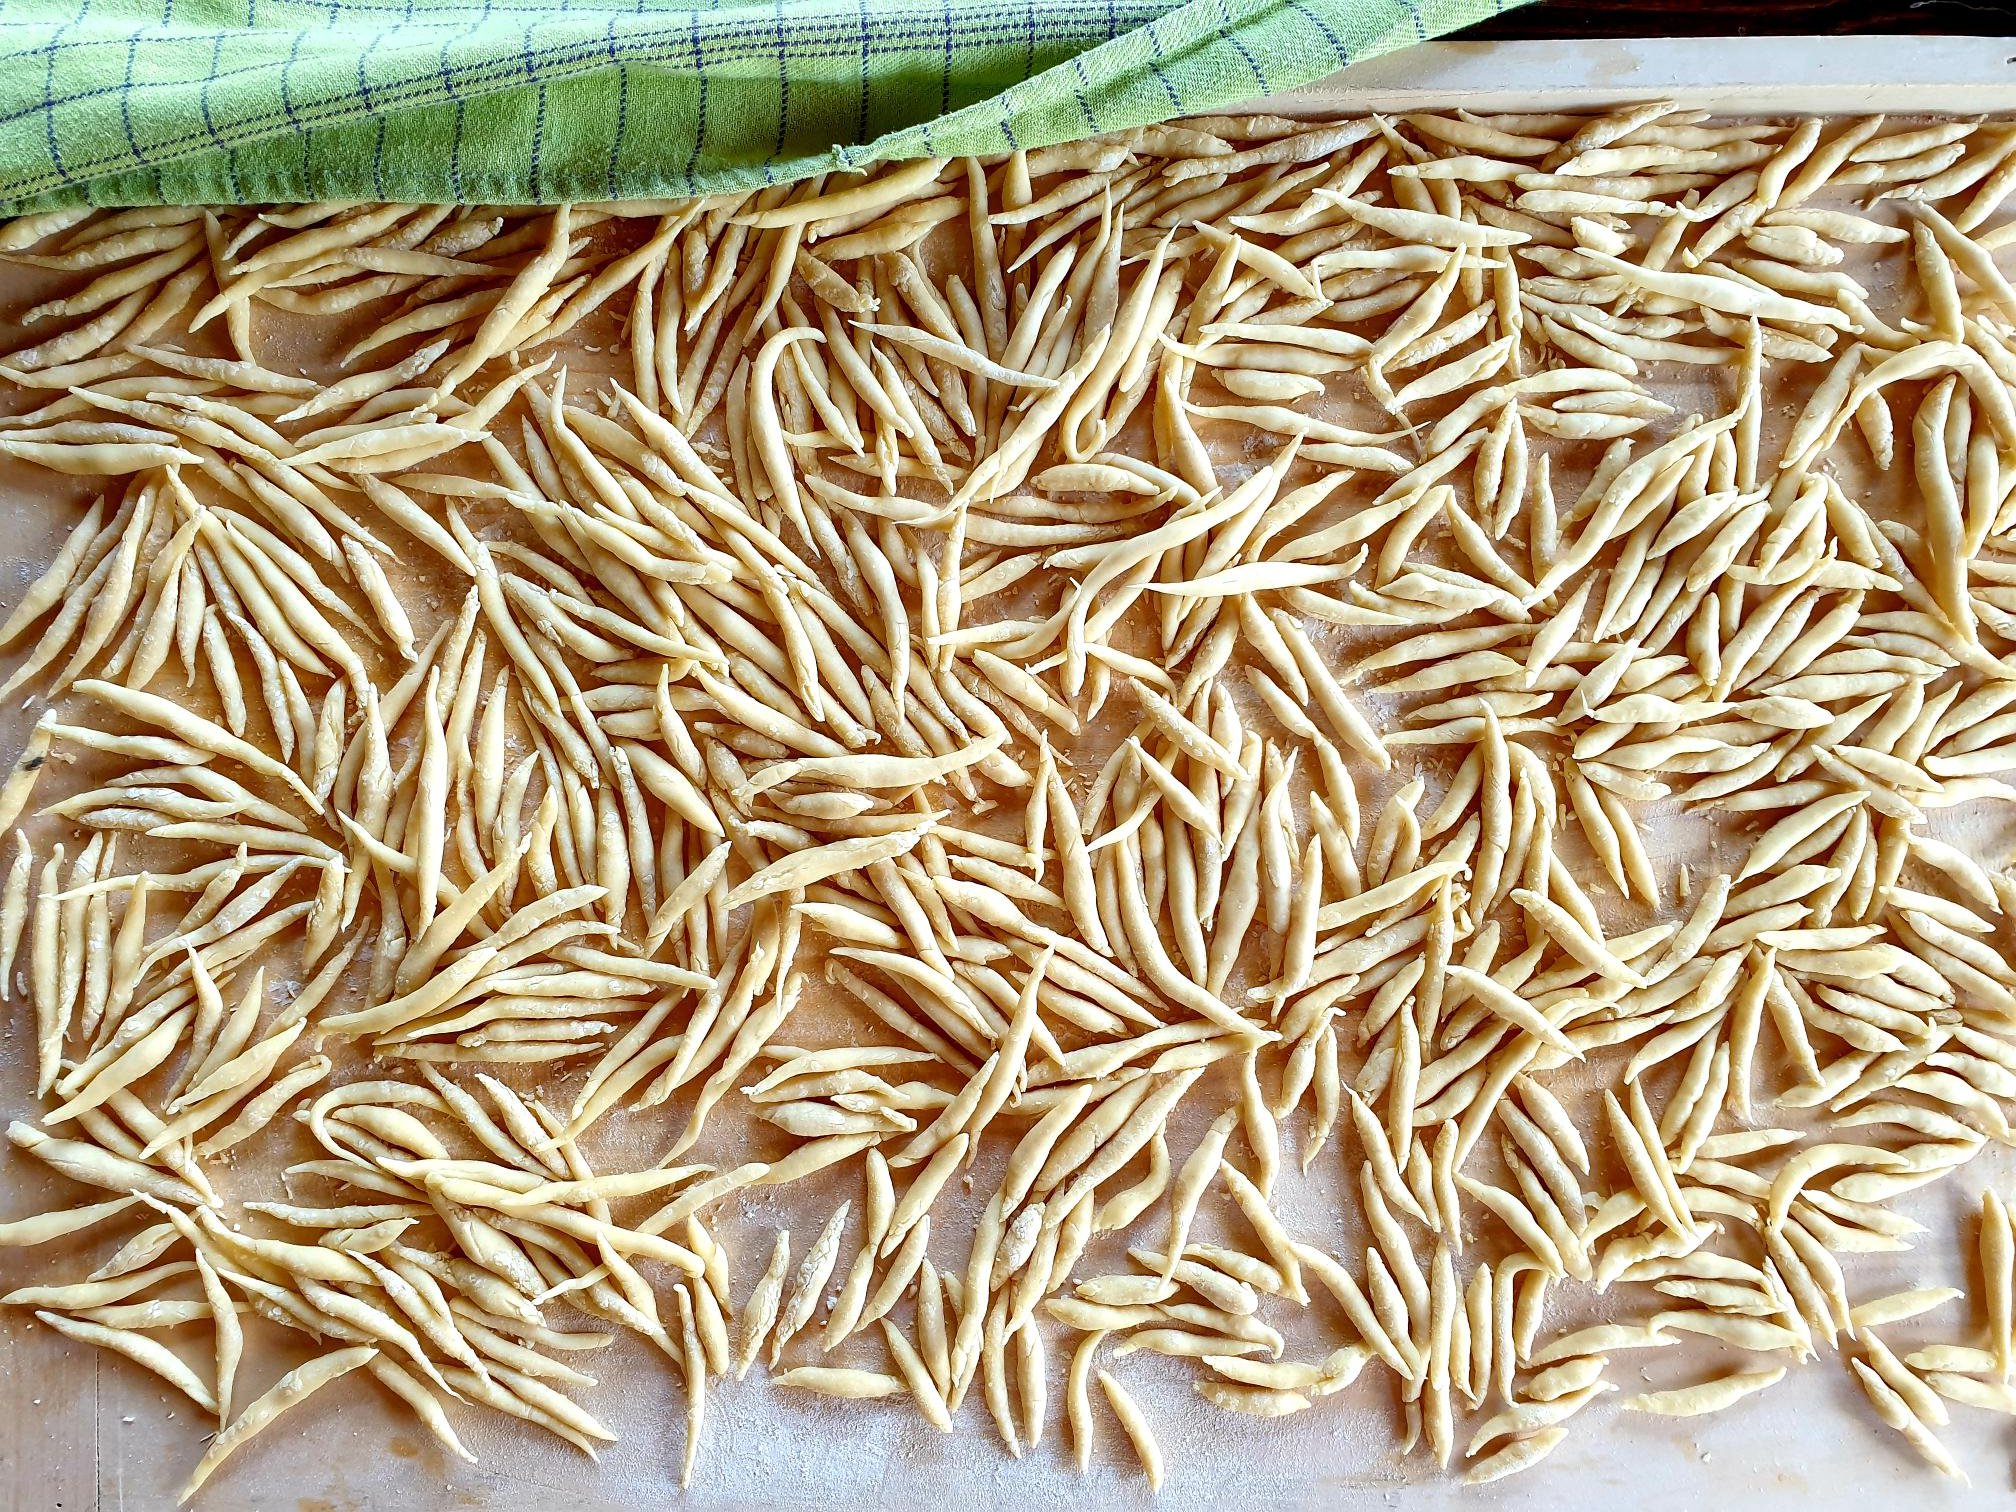 Pljukanci-Traditional Istrian handmade rolled pasta Recipe